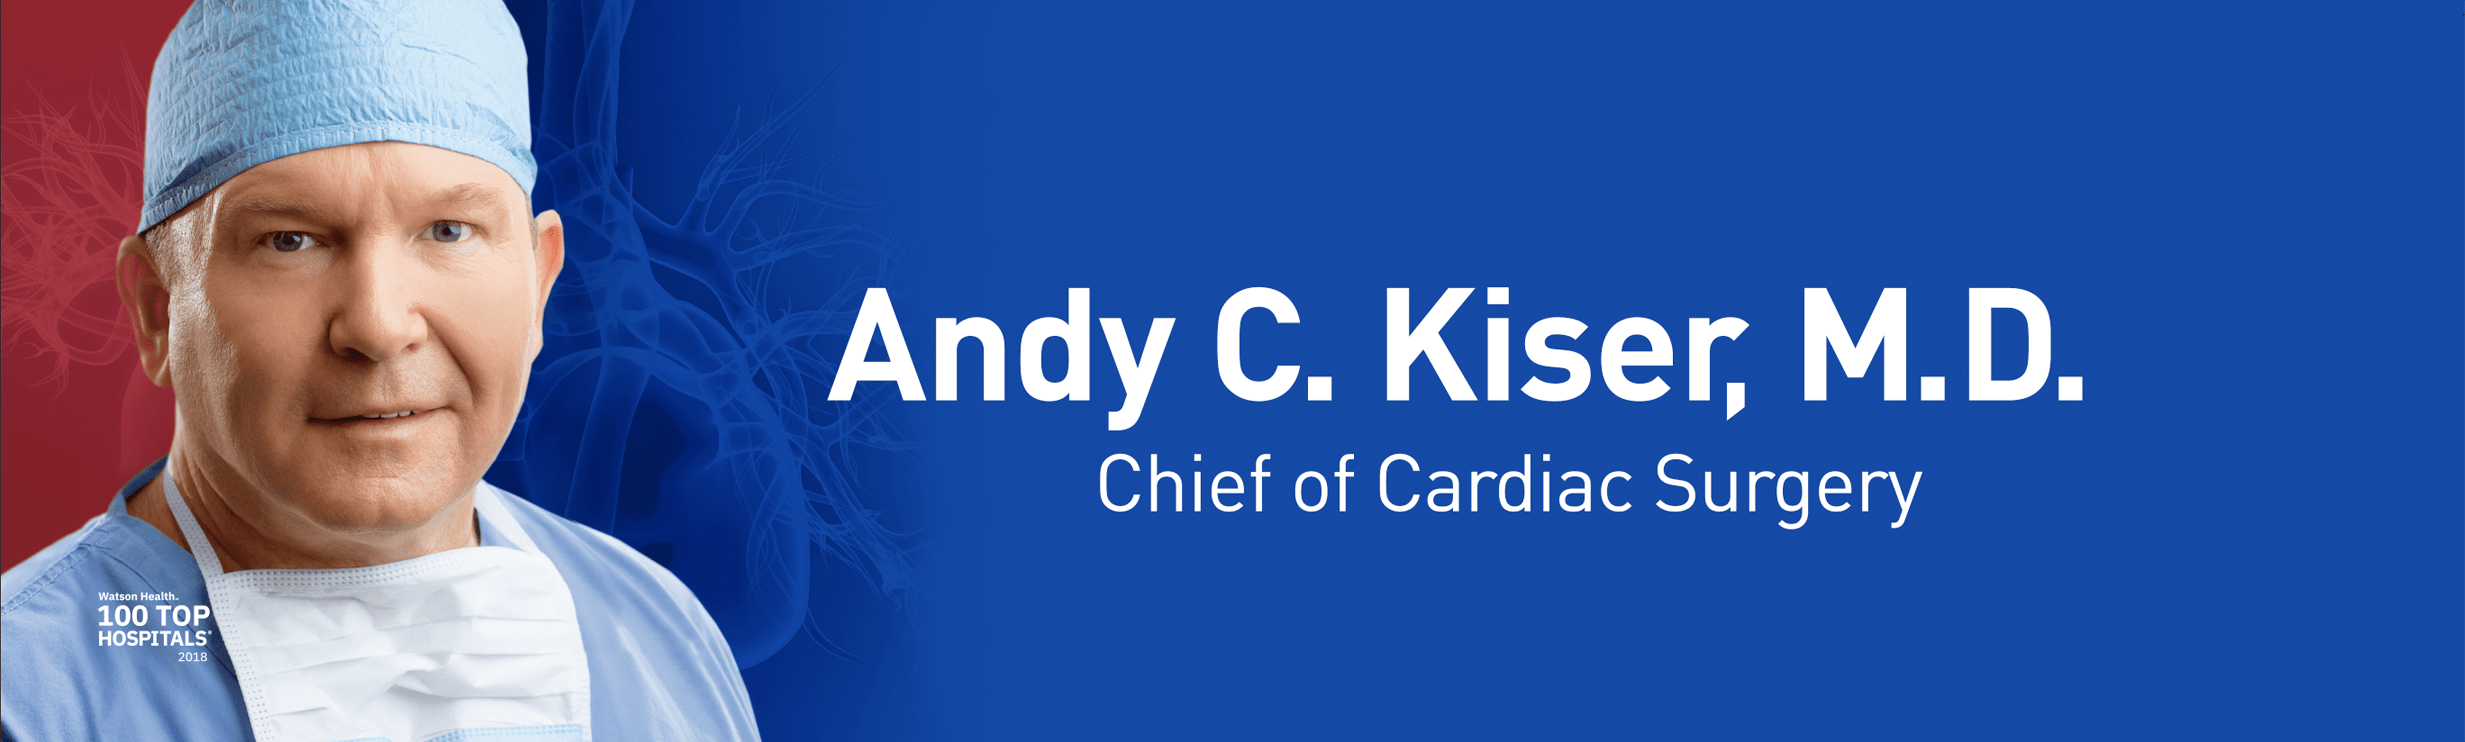 Andy C. Kiser, M.D.